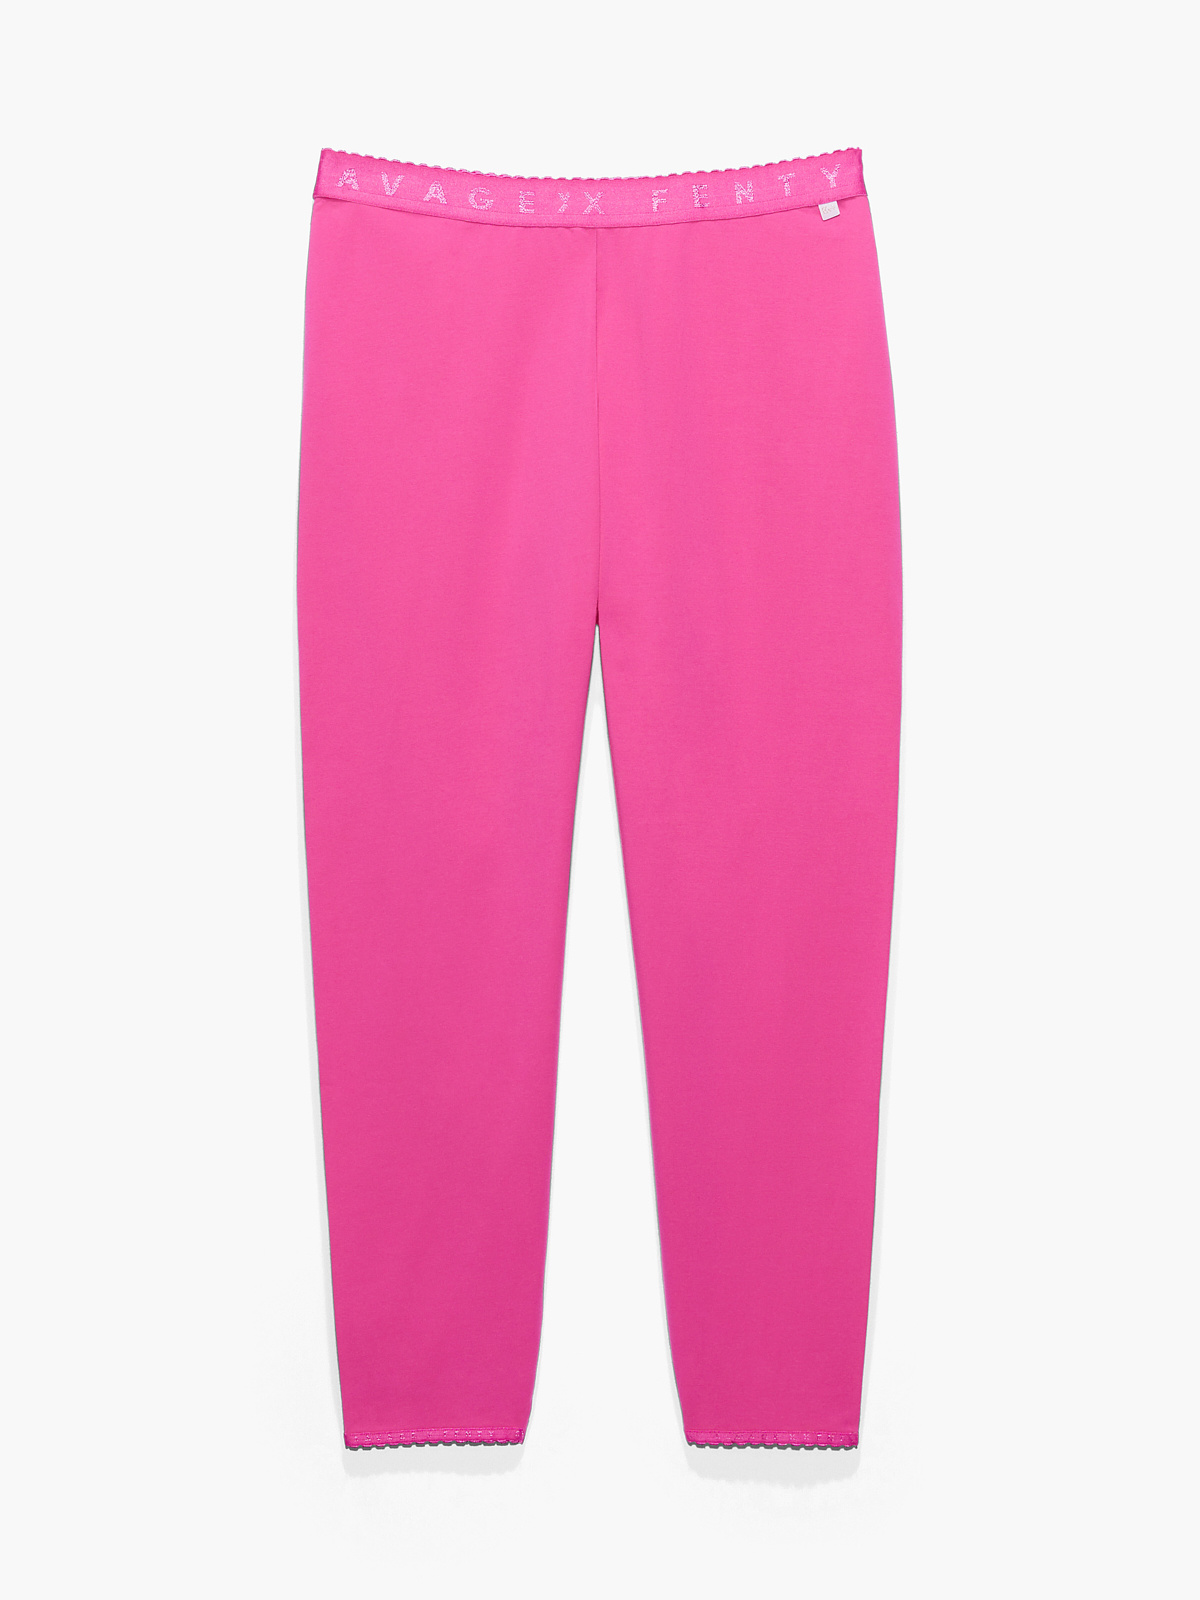 CLF Savage X Cotton Jersey Hot Short in Pink